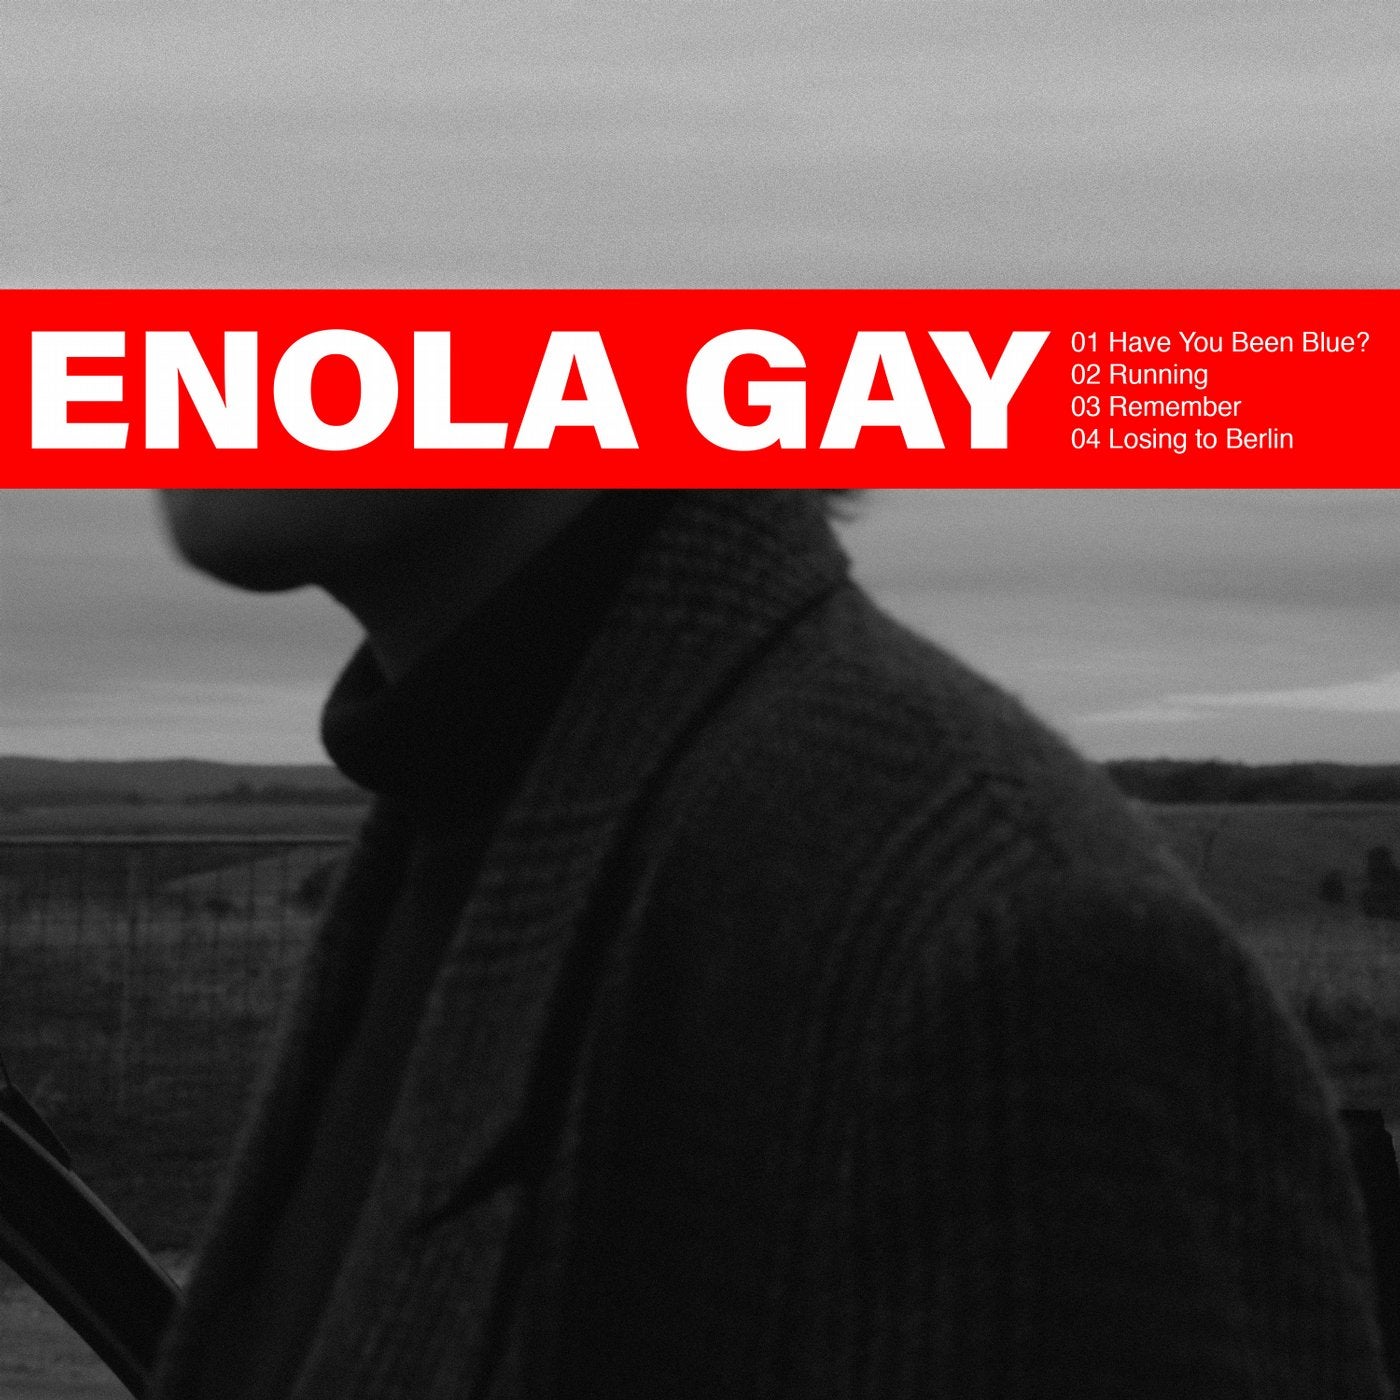 enola gay song year released